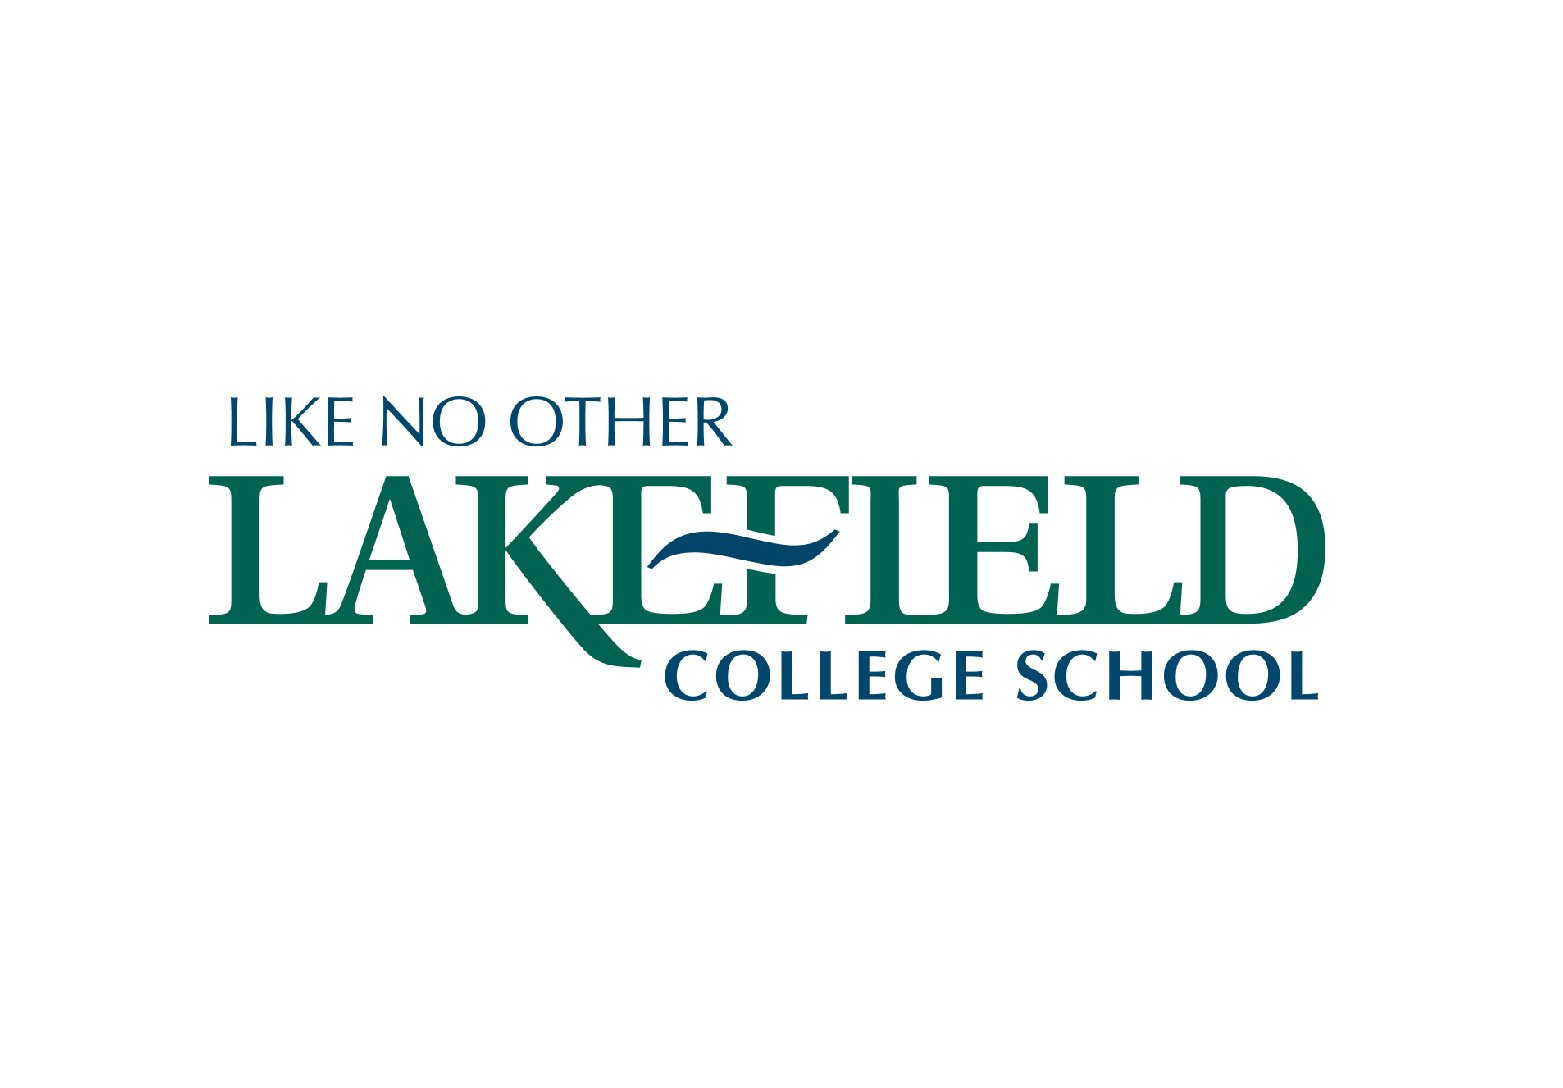 Lakefield College